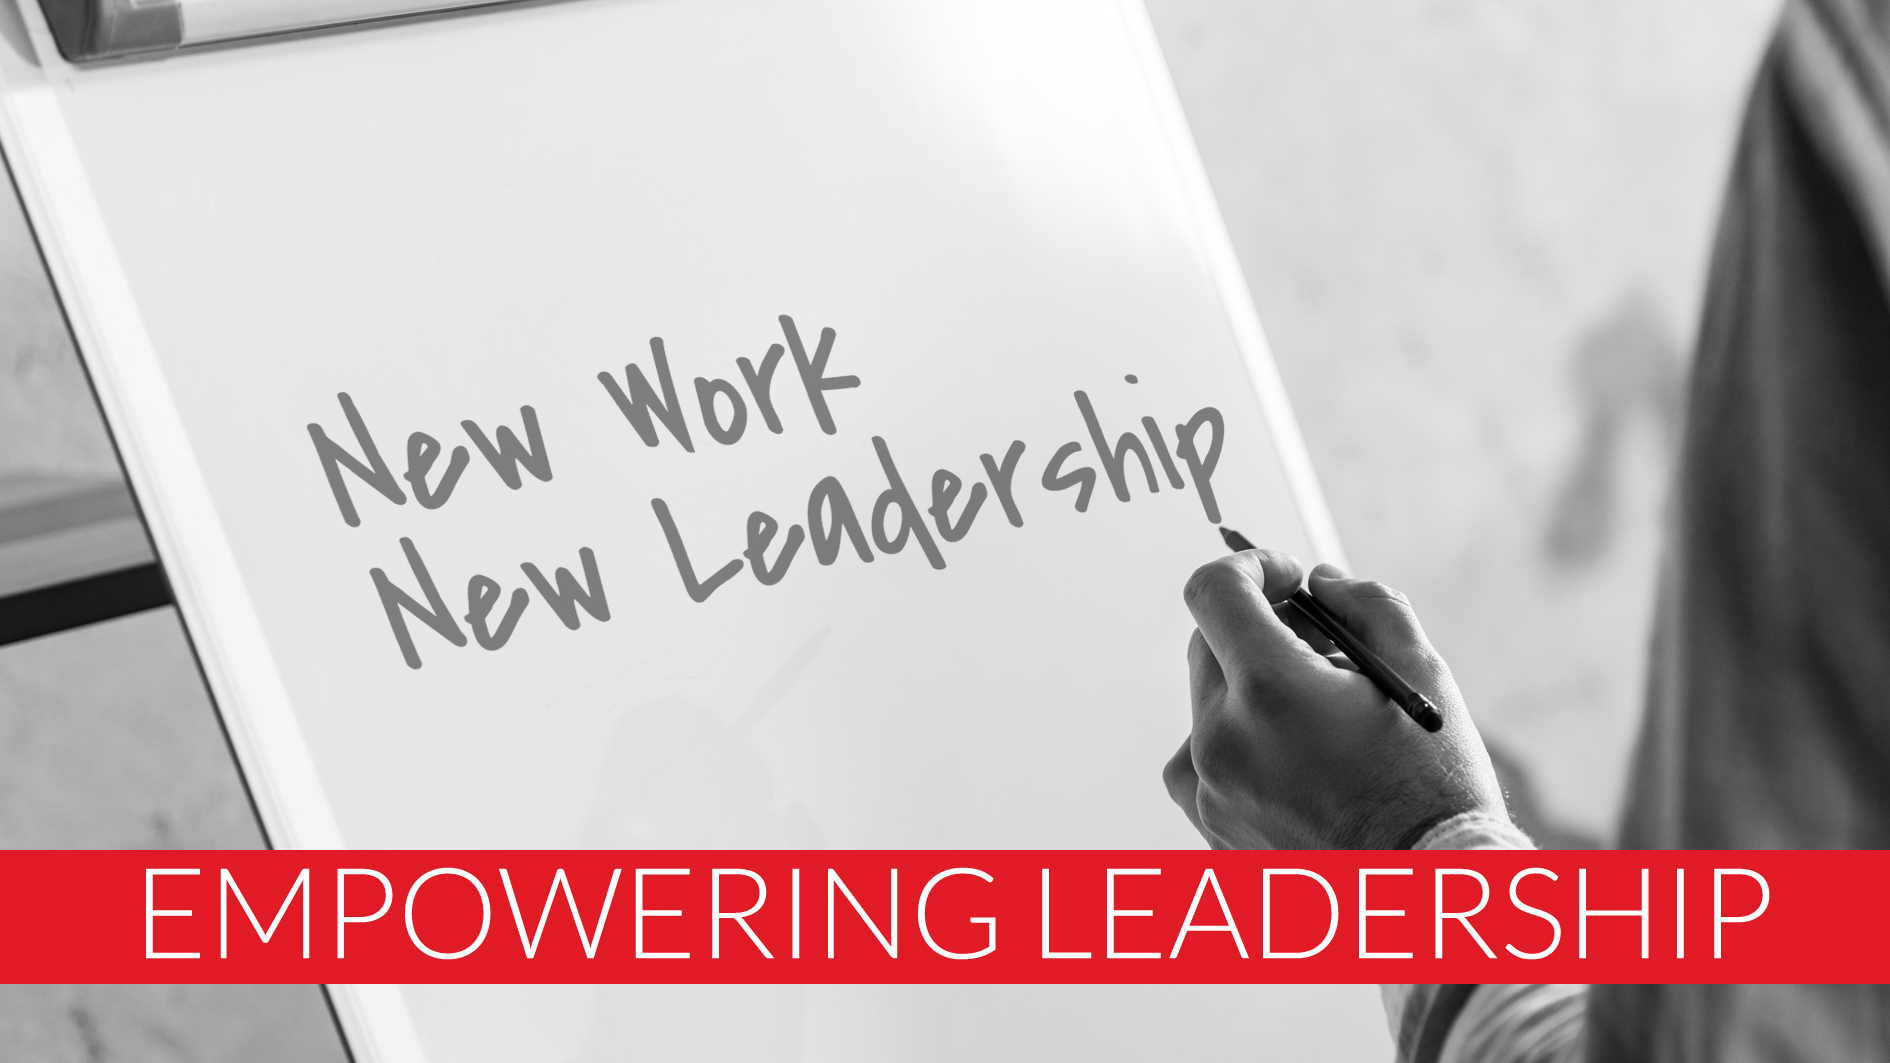 Empowering Leadership